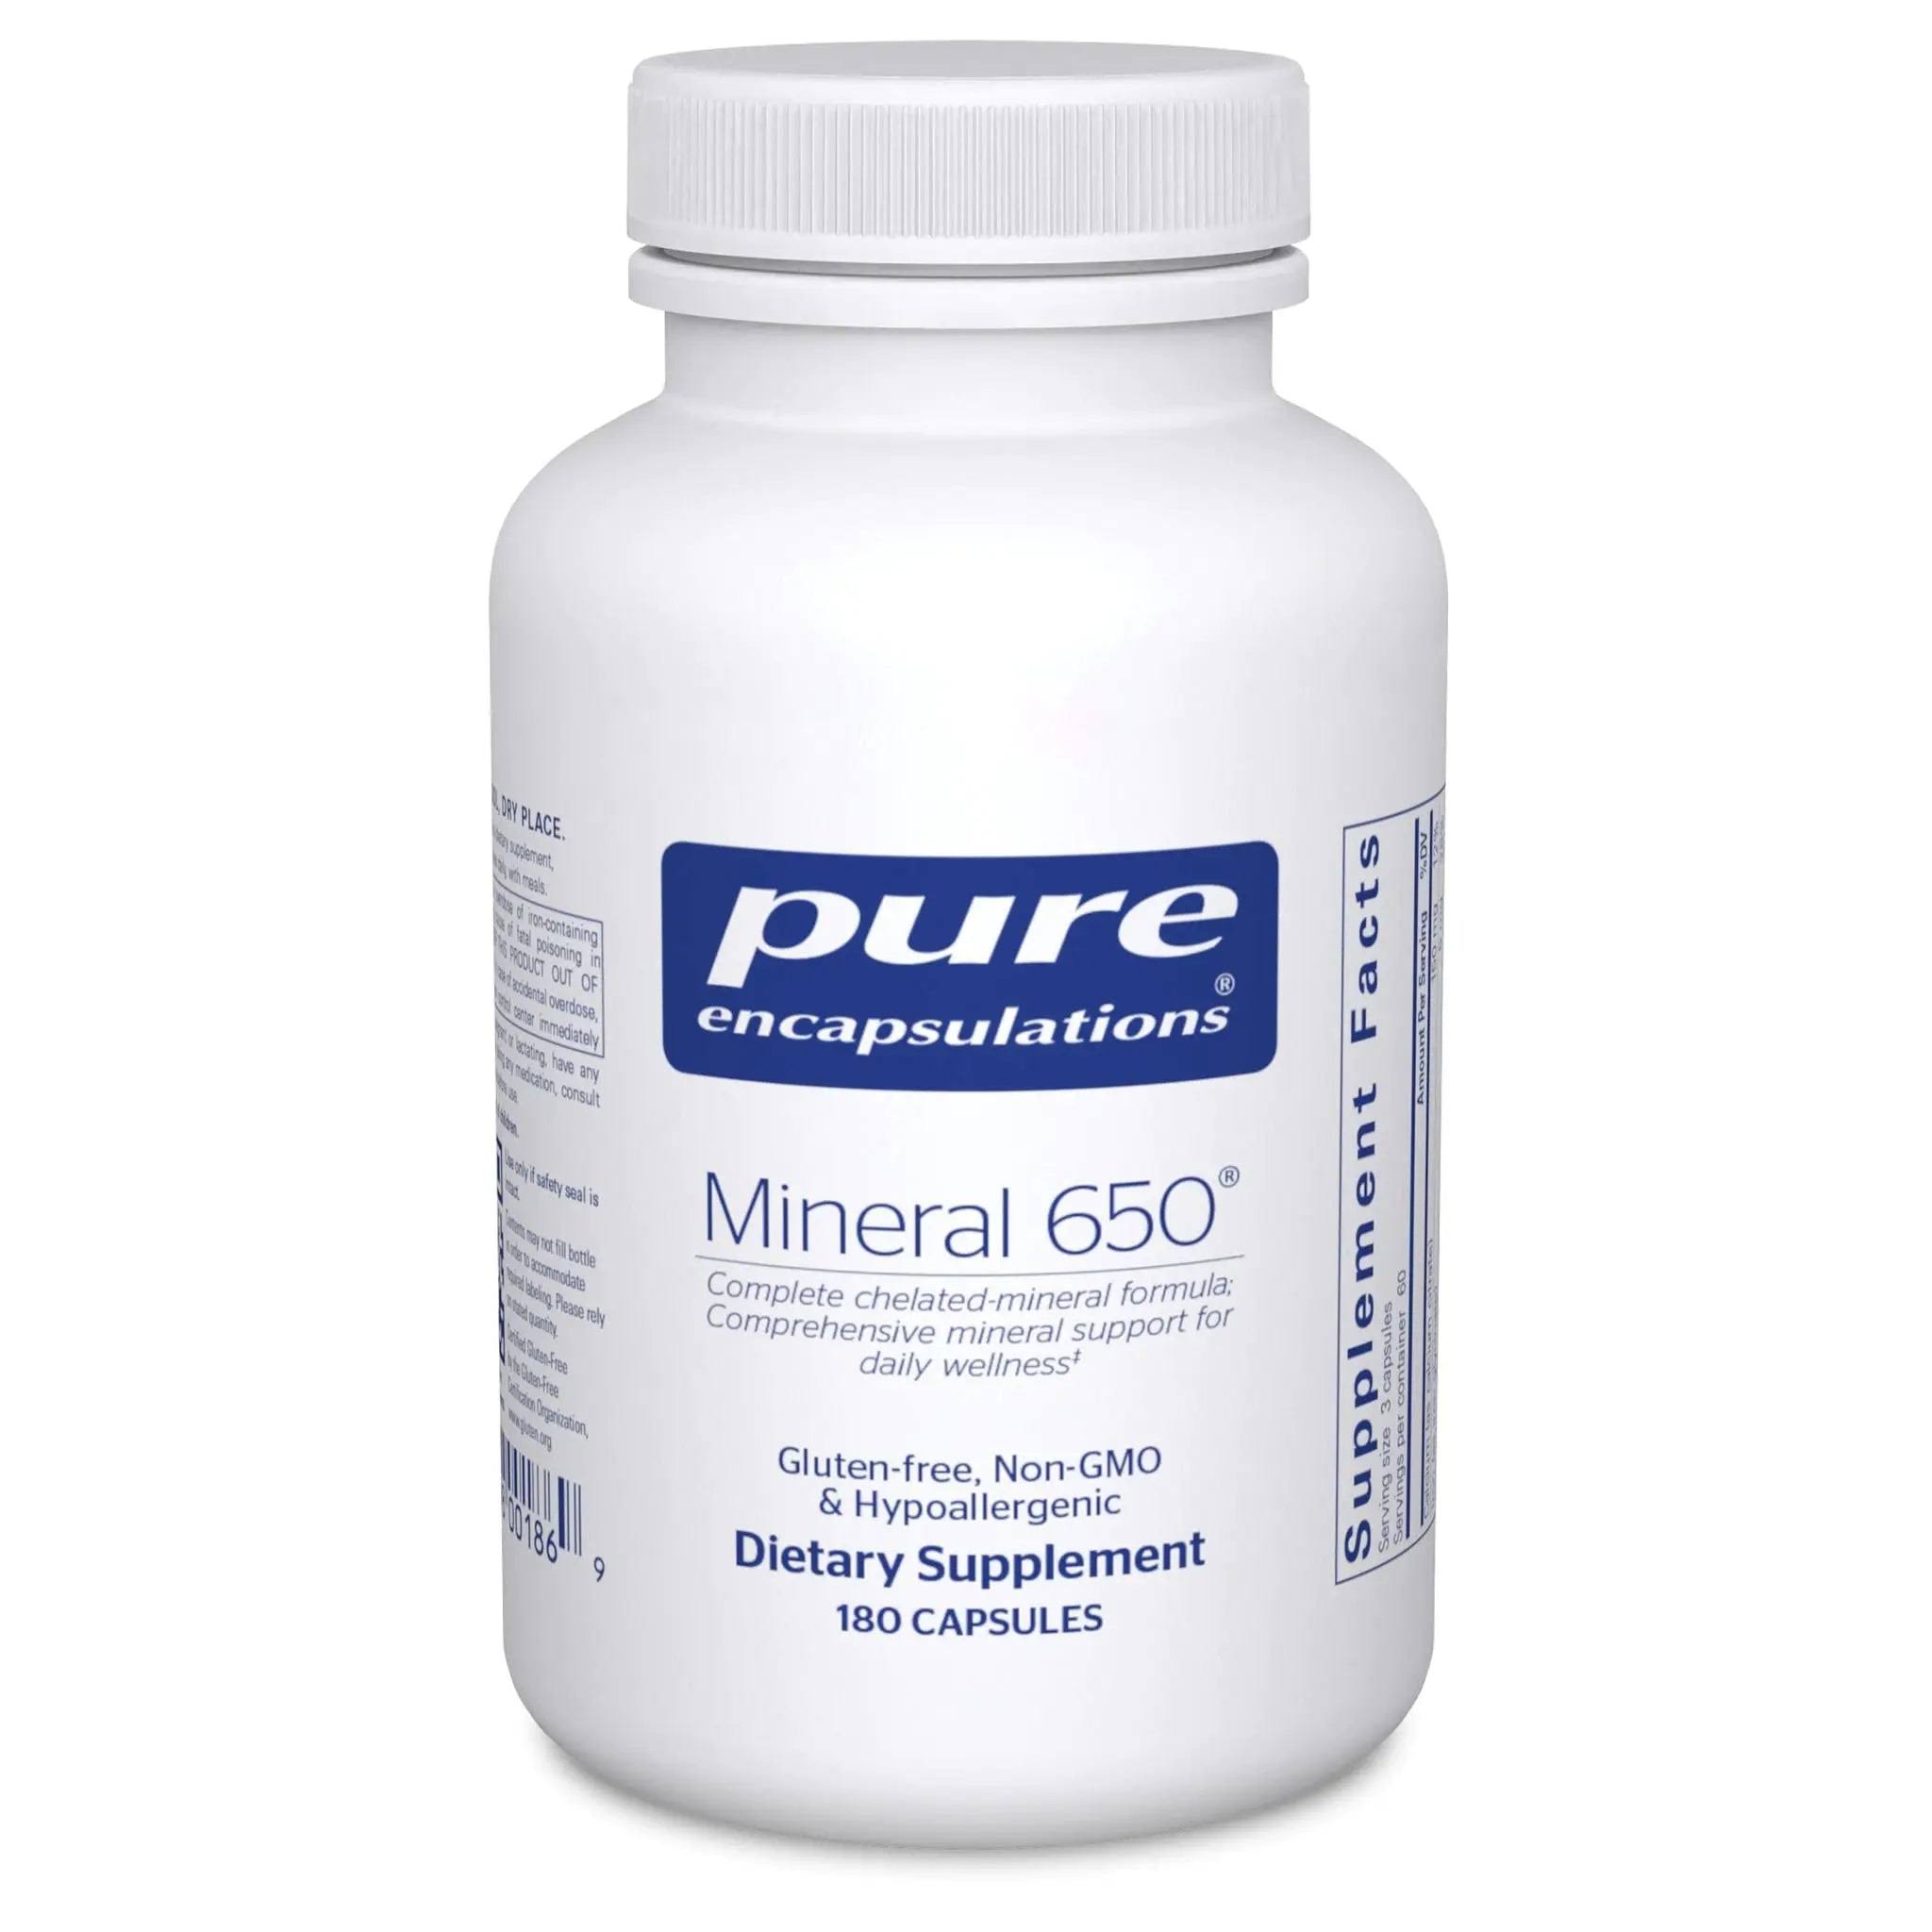 Pure Encapsulations Mineral 650 Supplement - 180 Capsules